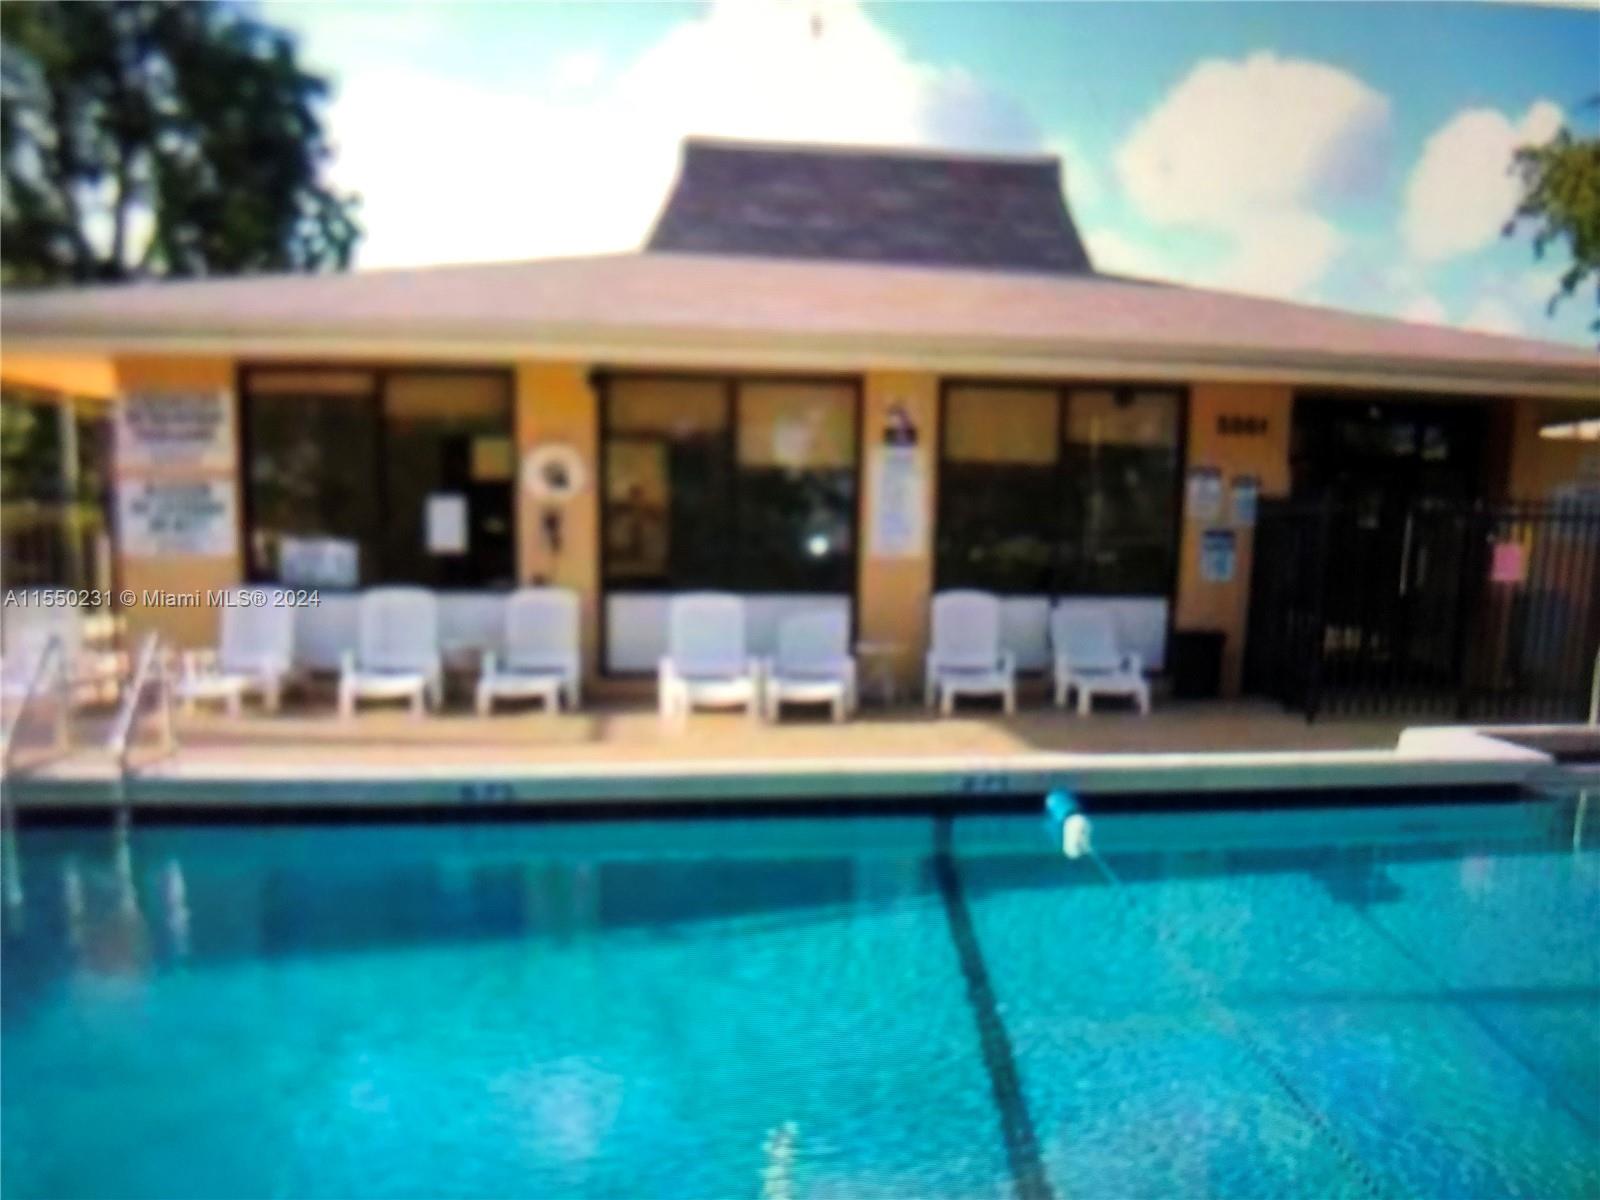 Property for Sale at 5851 Washington St 84, Hollywood, Broward County, Florida - Bedrooms: 2 
Bathrooms: 2  - $235,000